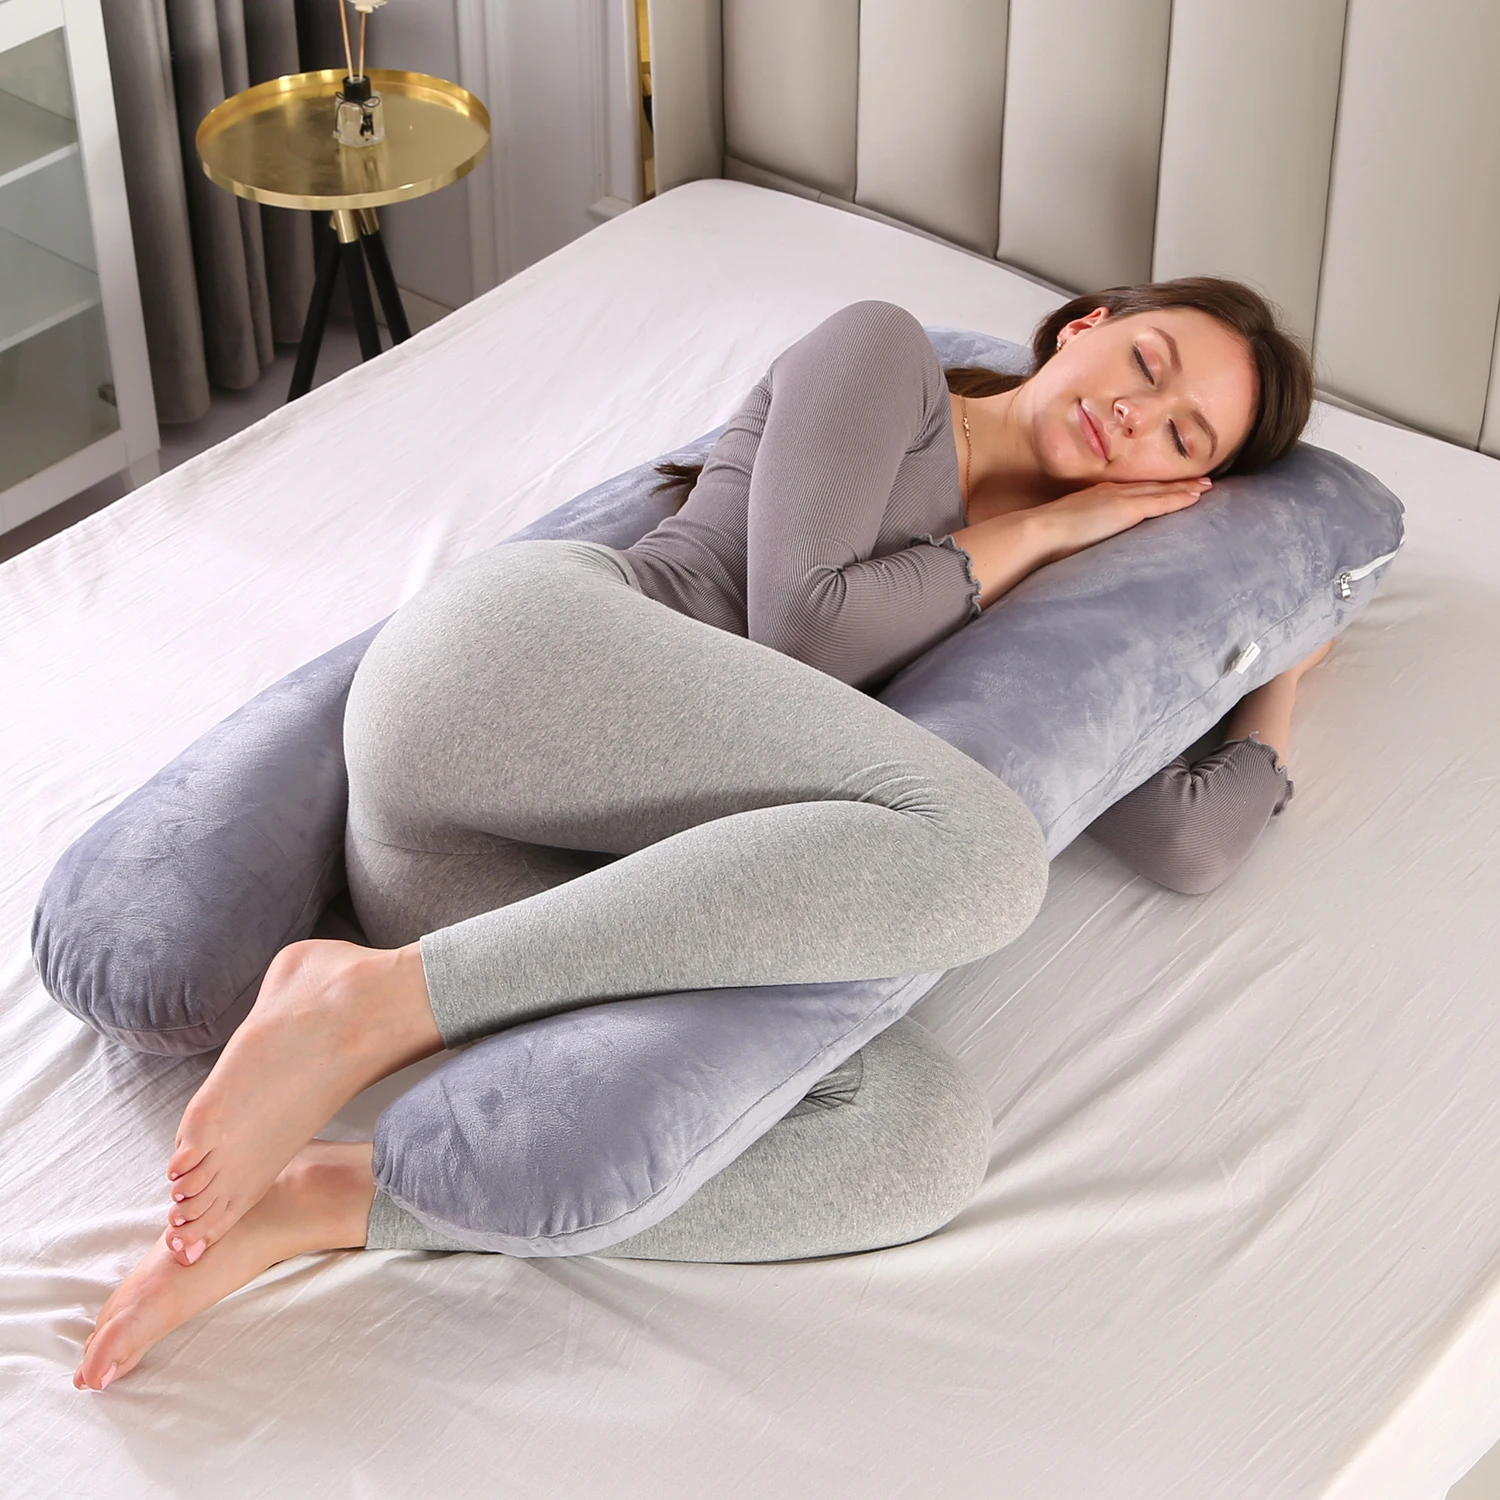 https://ae01.alicdn.com/kf/Had672992bdb6403cbbf86914a89d920bb/U-shape-Maternity-Pillows-Pregnancy-Body-Pillow-Pregnant-Women-Side-Sleepers-Bedding-Pillows-Dropshipping.jpg